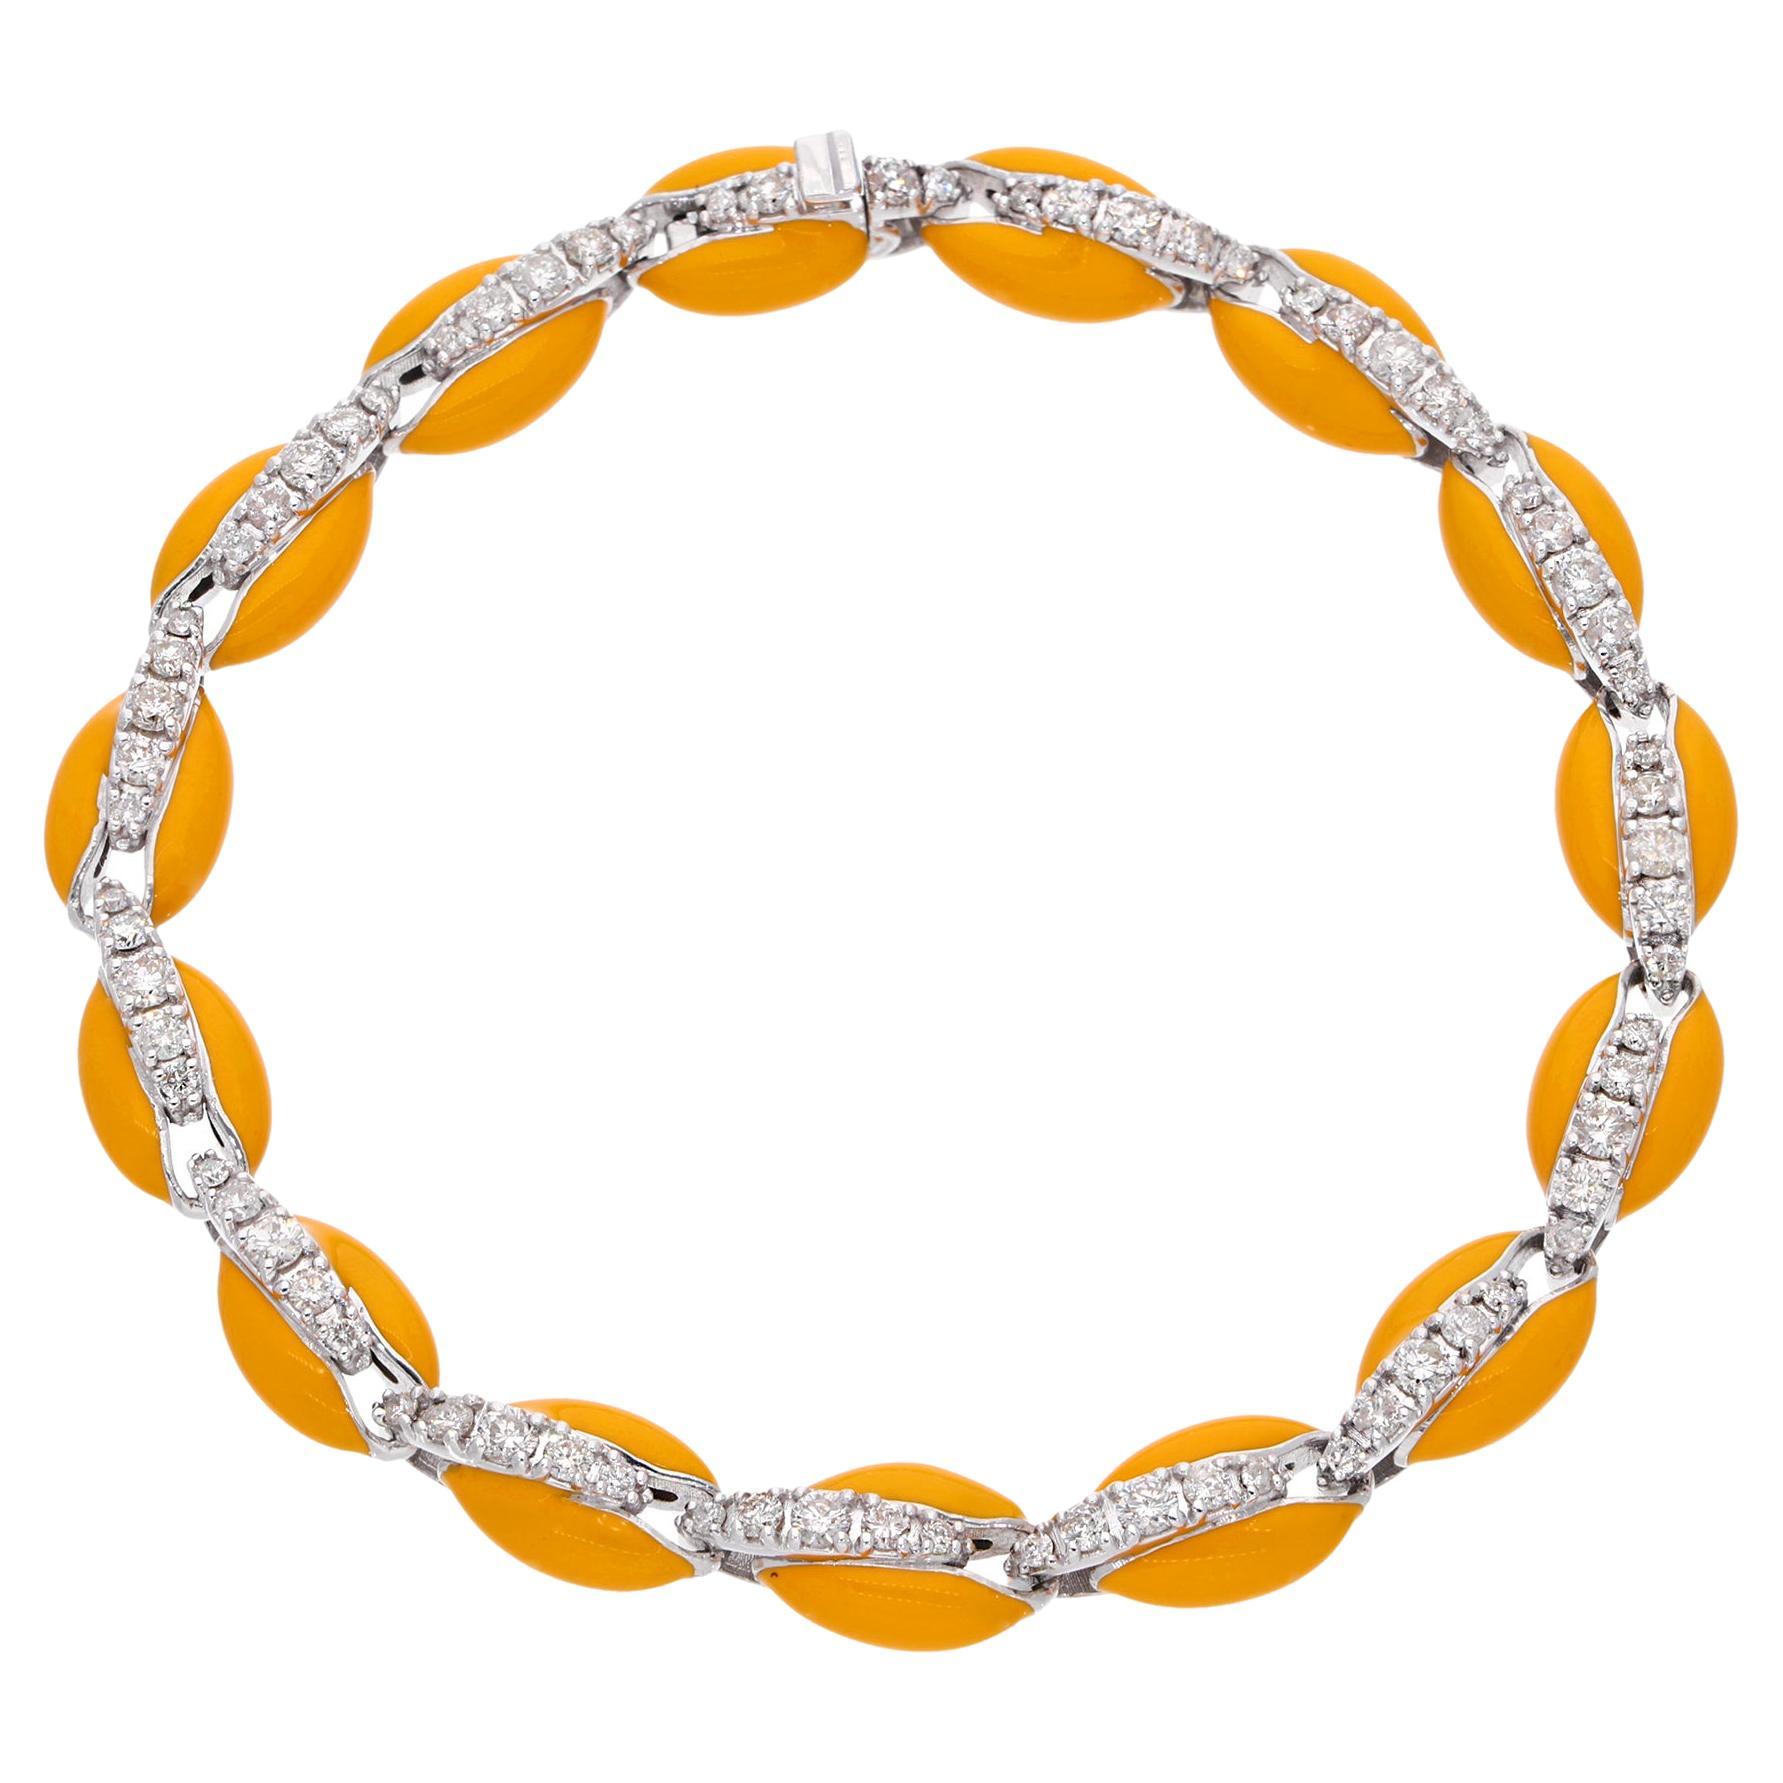 1.9 Carat Diamond Yellow Enamel Cowrie Shell Bracelet 10 Kt White Gold Jewelry For Sale